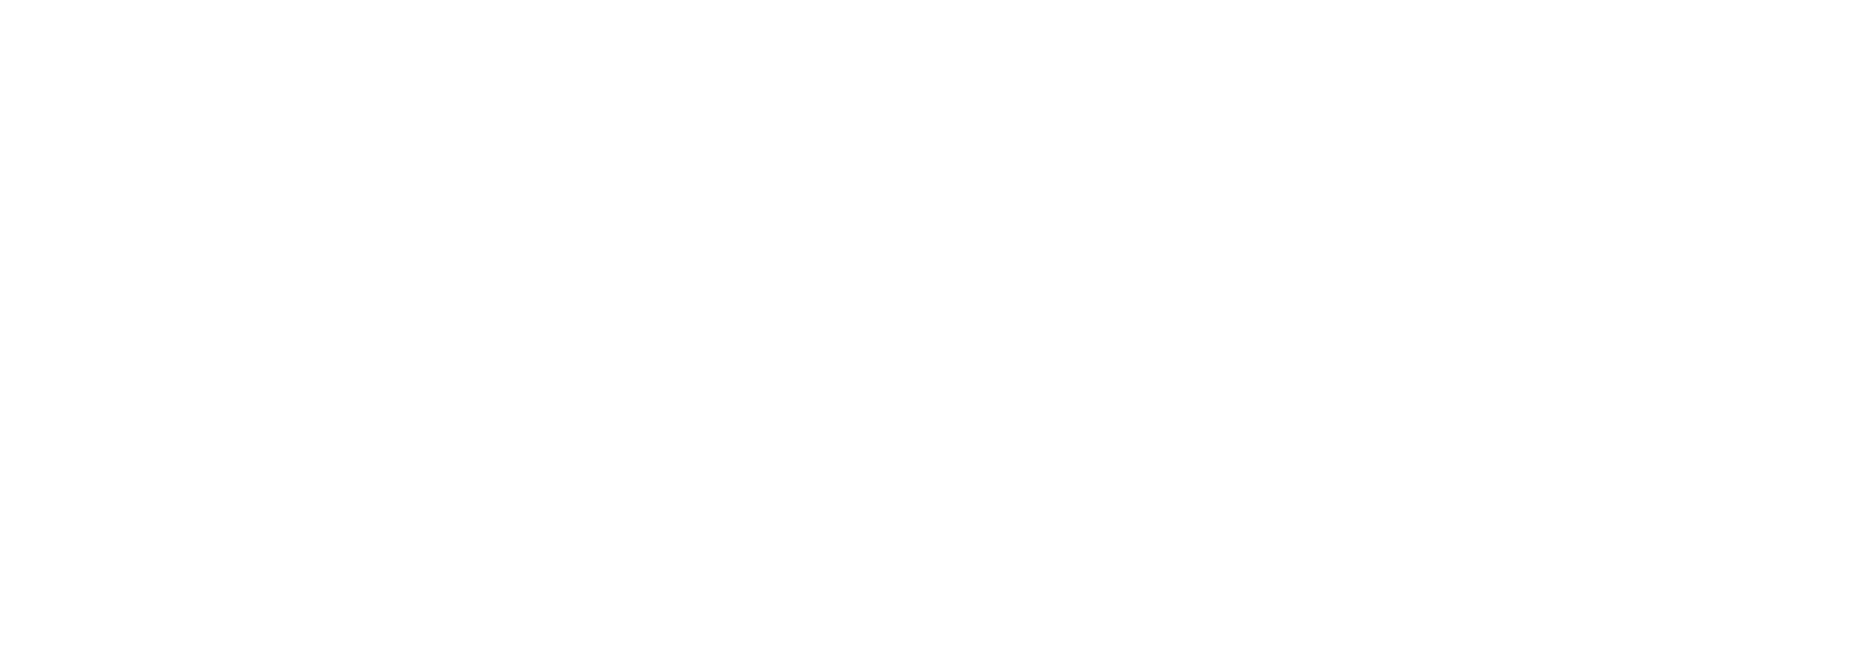 XboxGamePass_2020_stack-alt_Wht_RGB.png